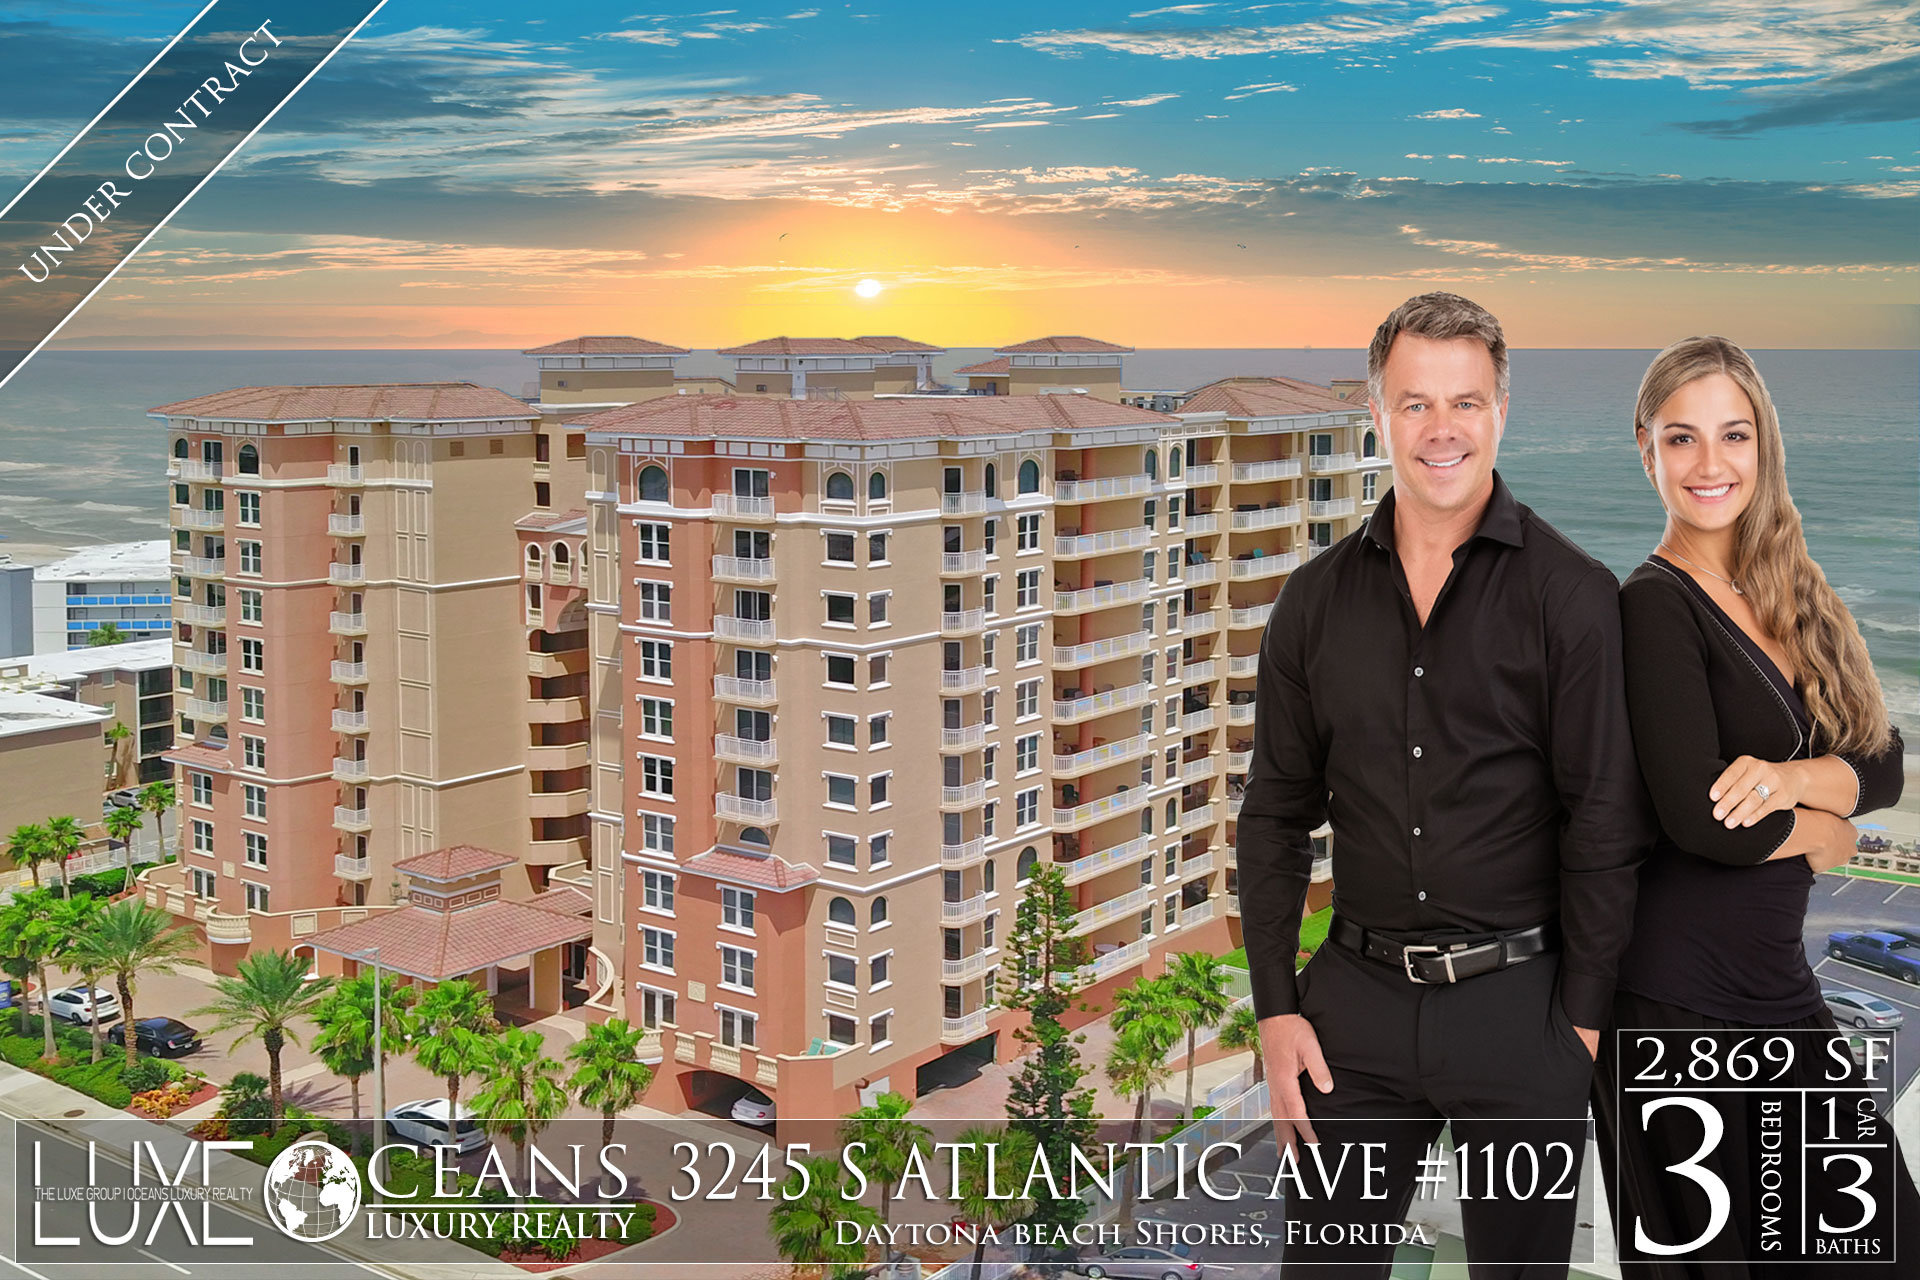 Palma Bella Condos For Sale Oceanfront Real Estate at 3245 S Atlantic Ave Daytona Beach Shores, FL Under Contract 